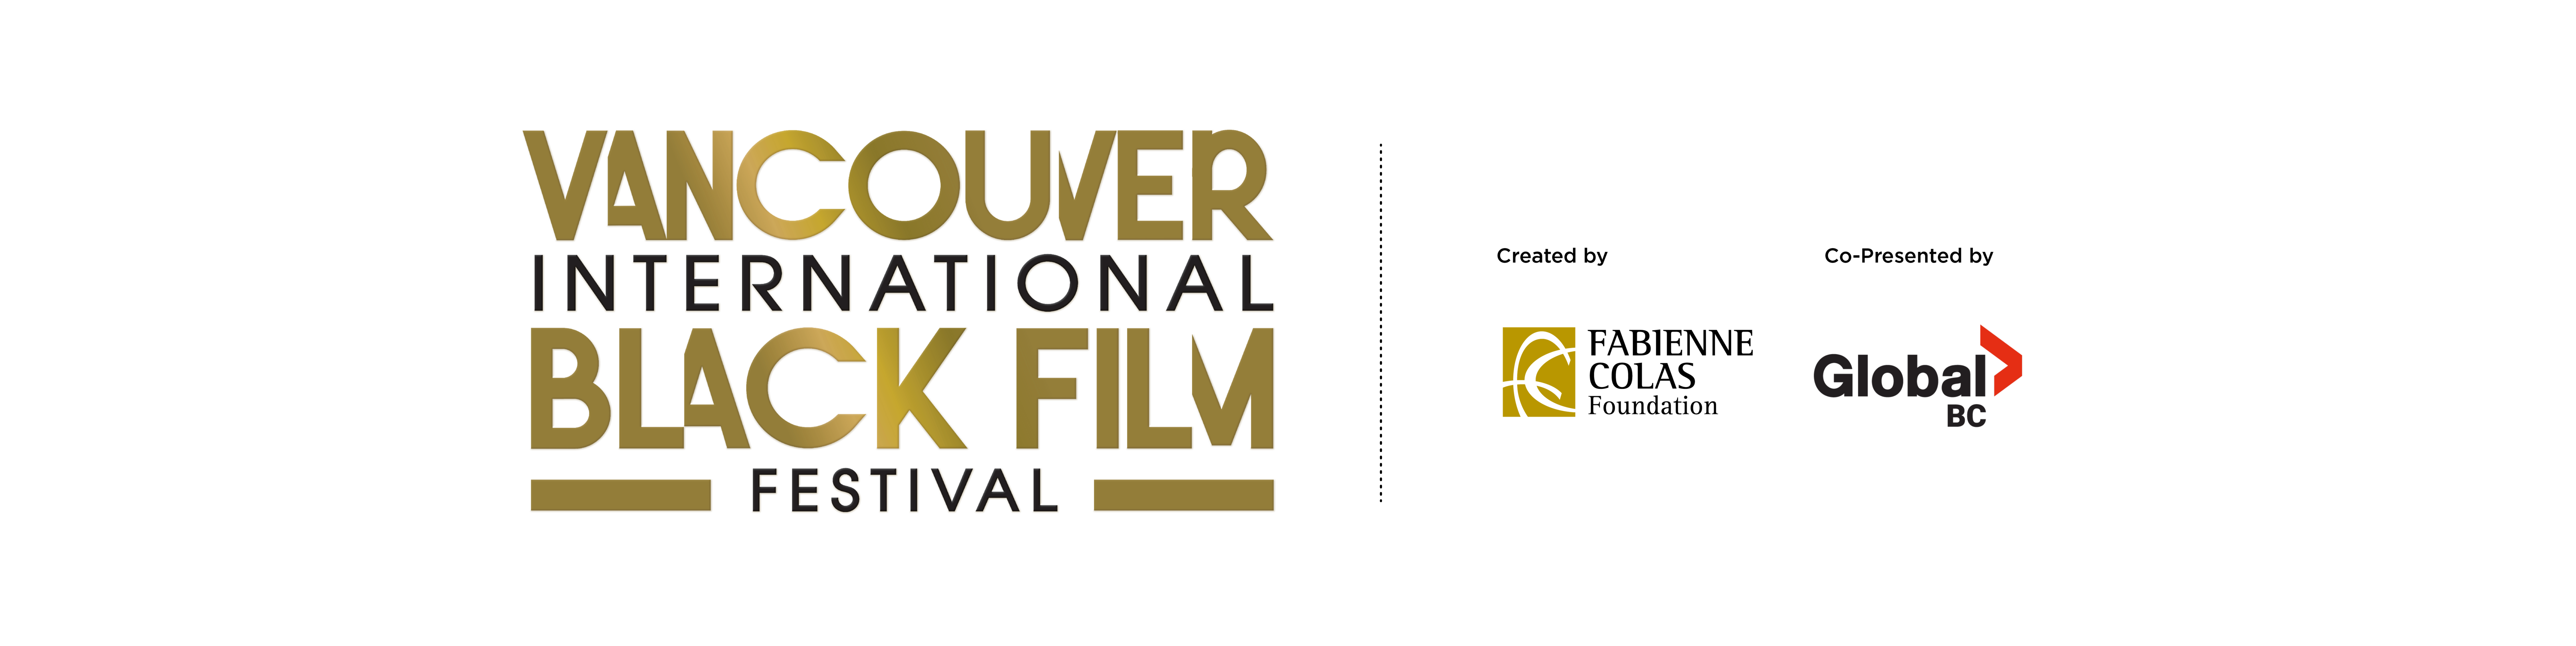 Vancouver International Black Film Festival